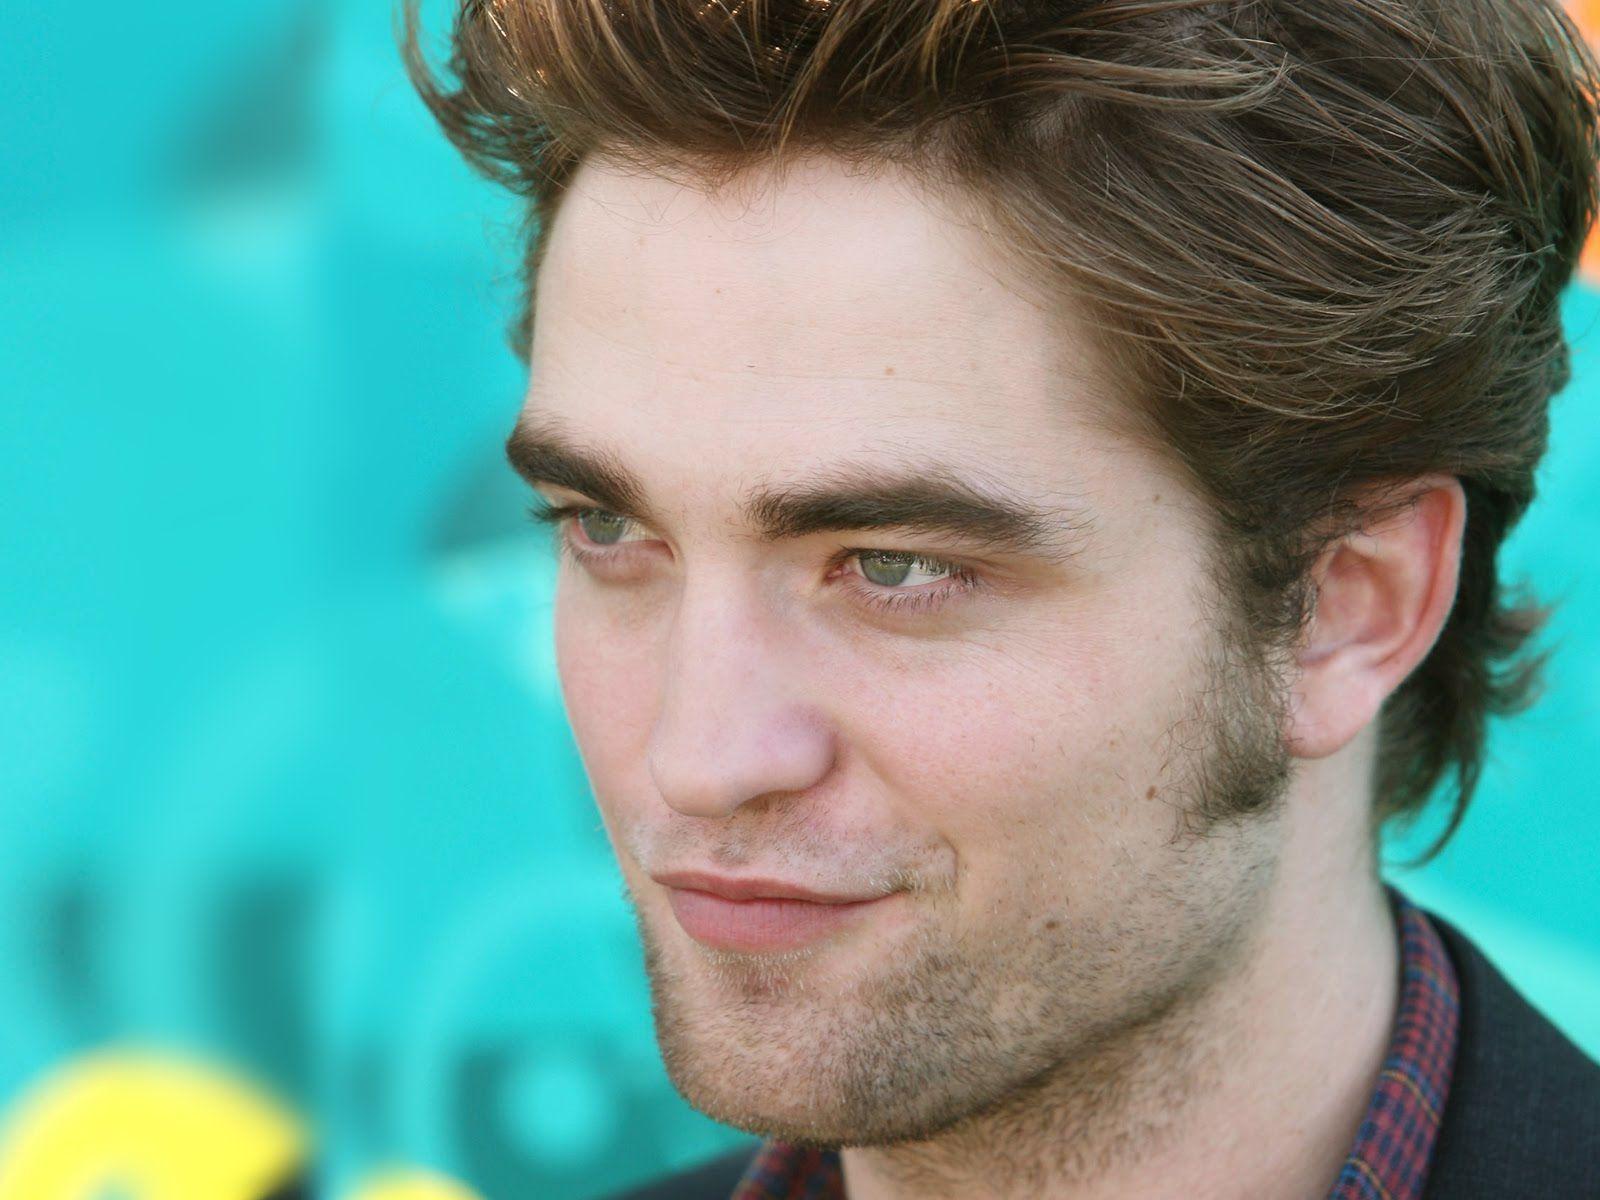 Robert Pattinson dating British singer FKA Twigs